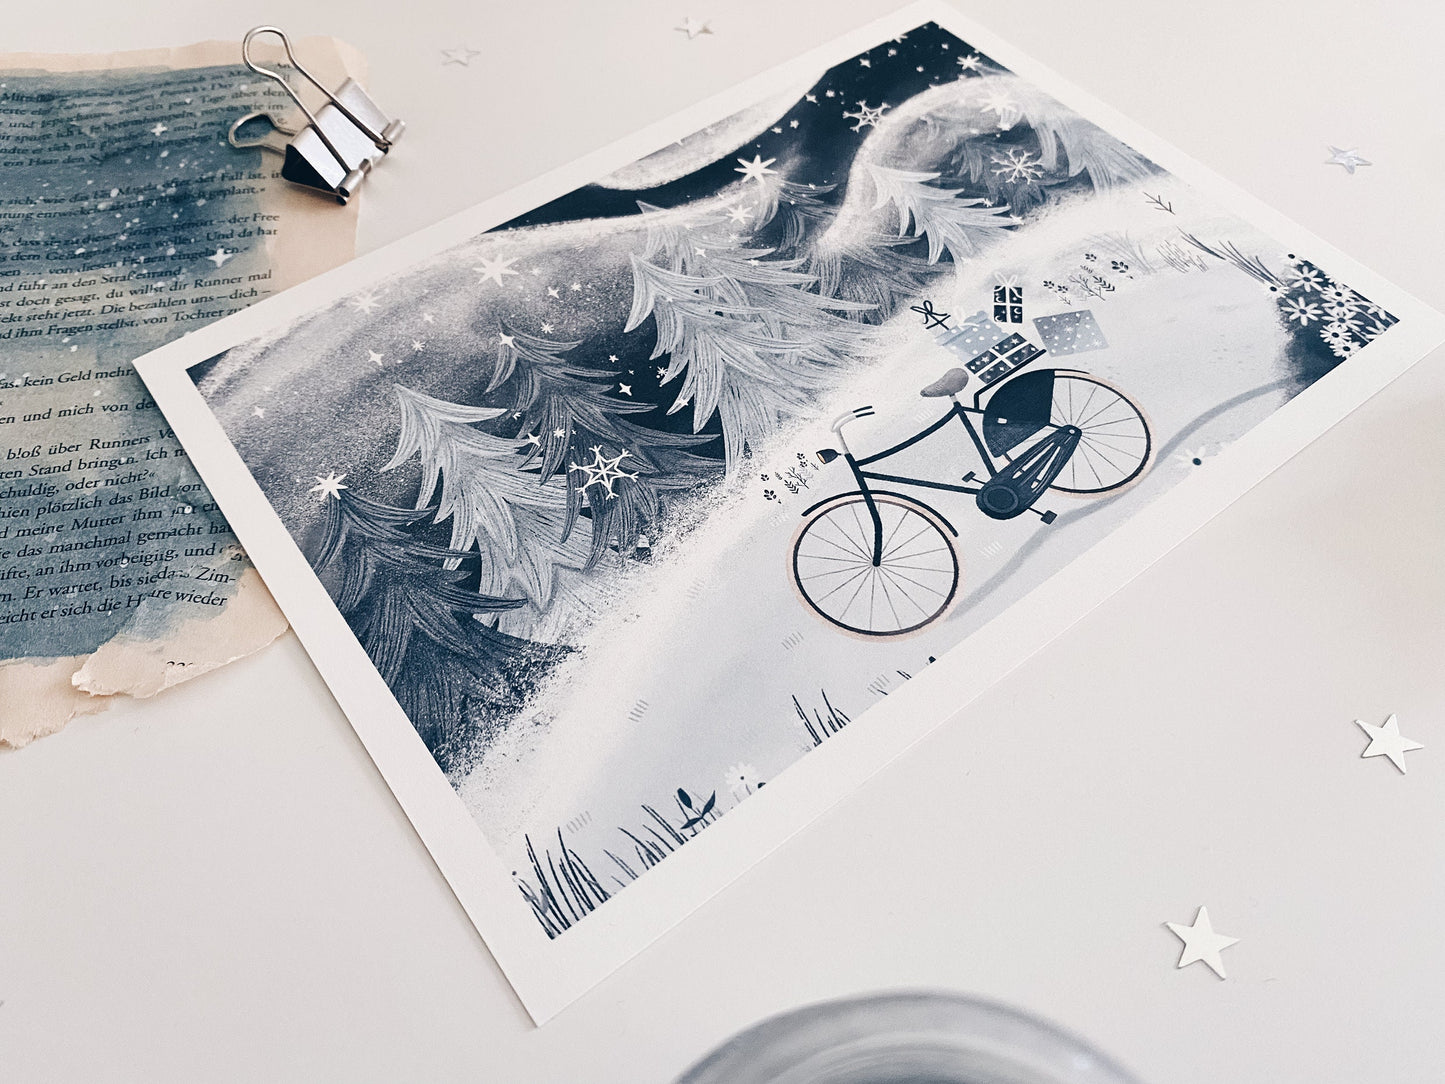 Art Print - Winter Wonderland Bike Ride